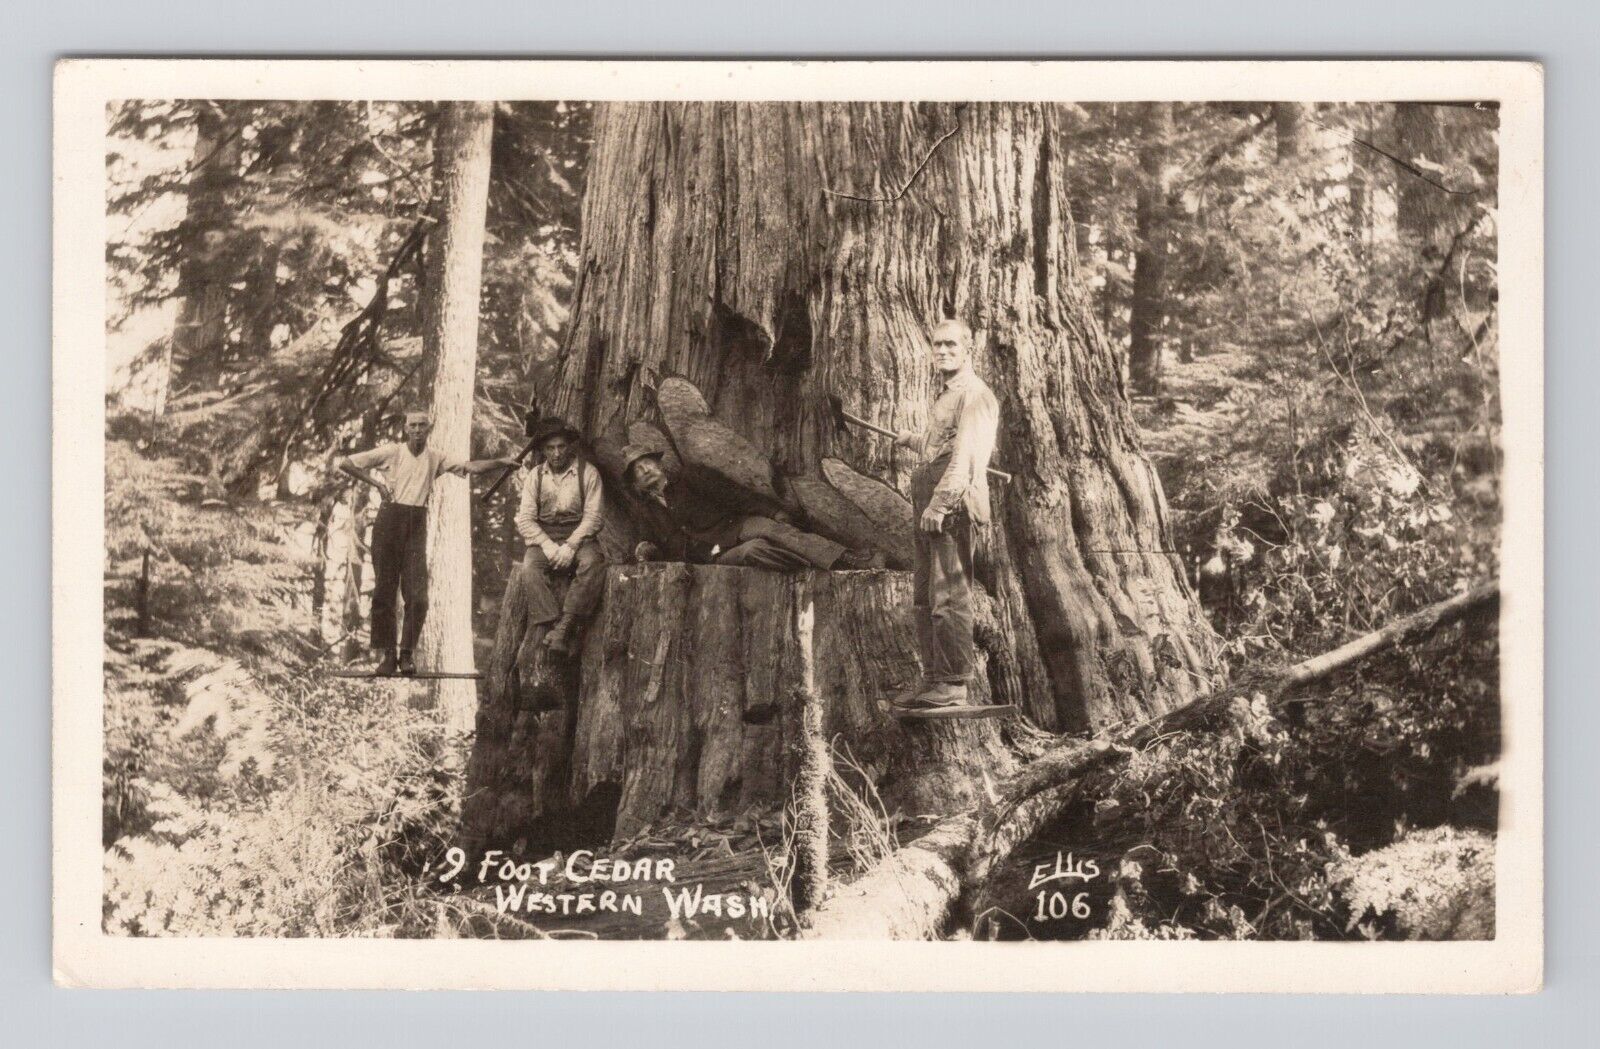 Postcard RPPC 9 Foot Cedar Western Washington Ellis 106 Logging Crew Pose